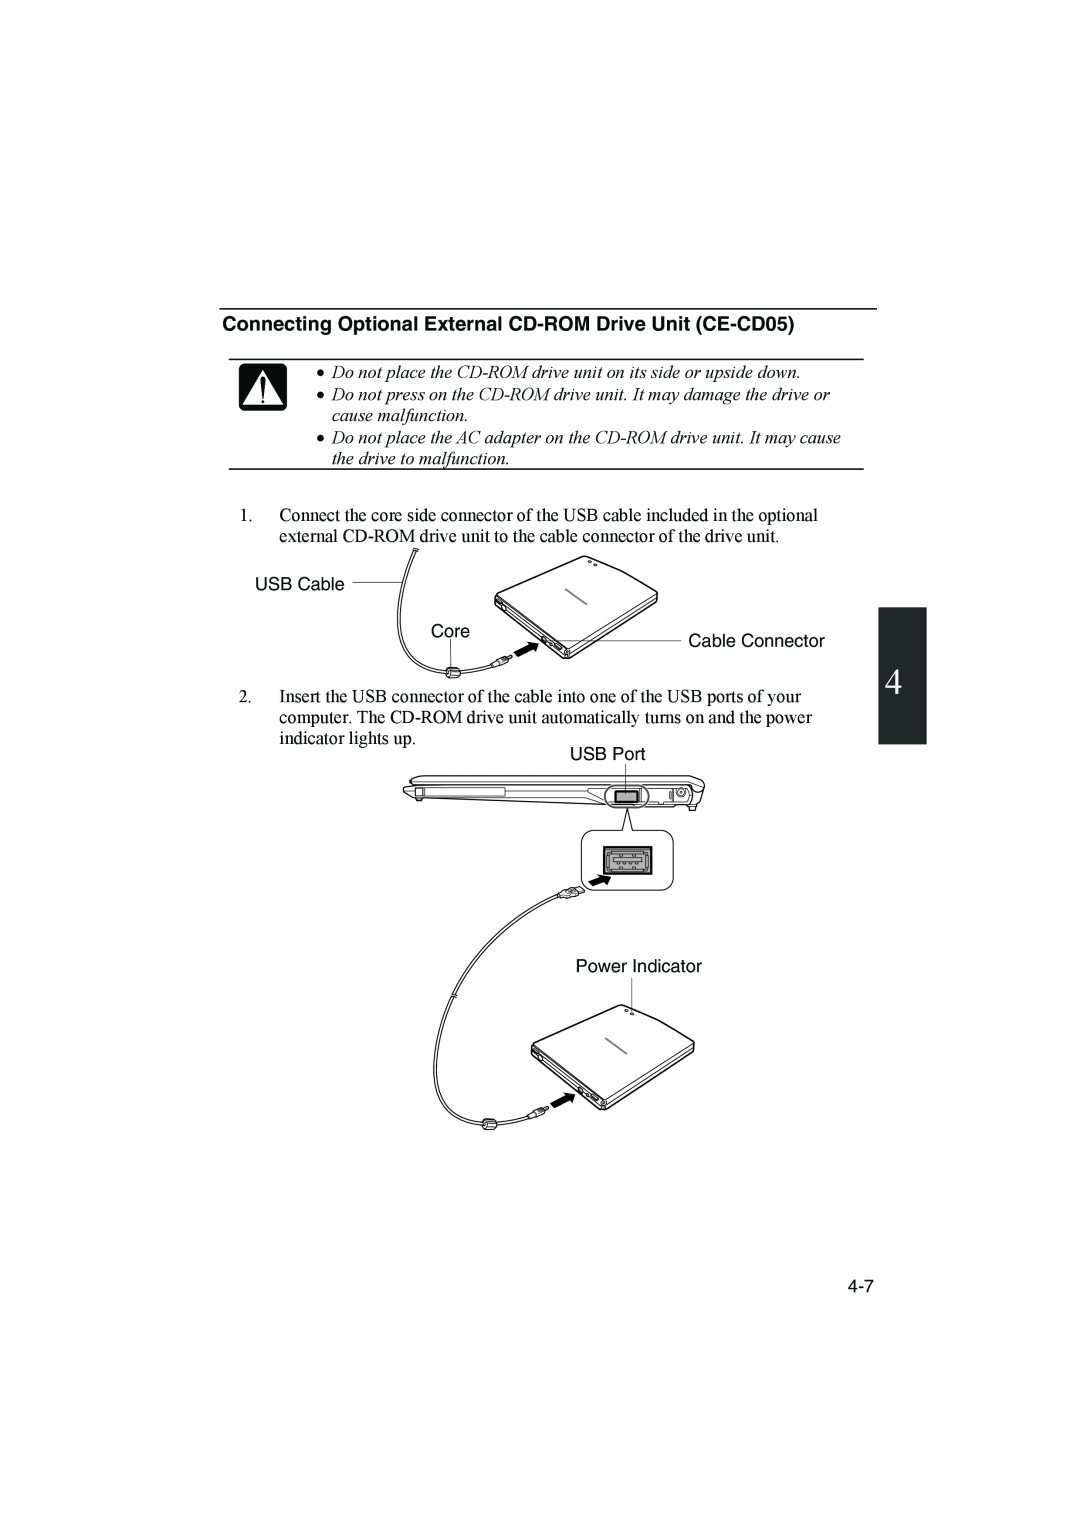 Sharp PC-MM1 manual Connecting Optional External CD-ROM Drive Unit CE-CD05 